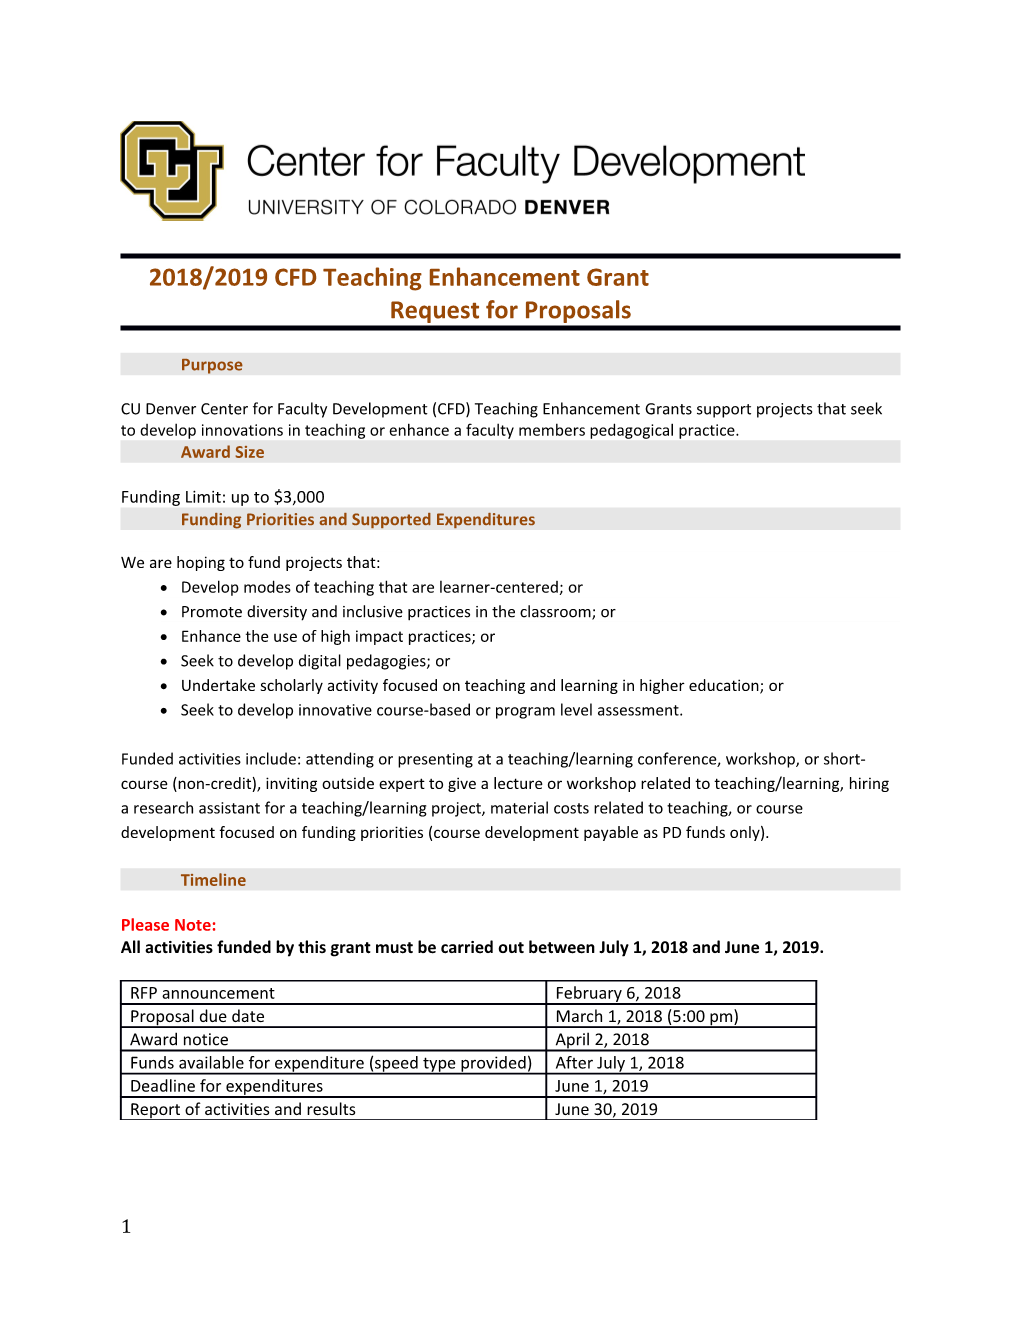 CFD Teaching Enhancement Grants 2017-2018